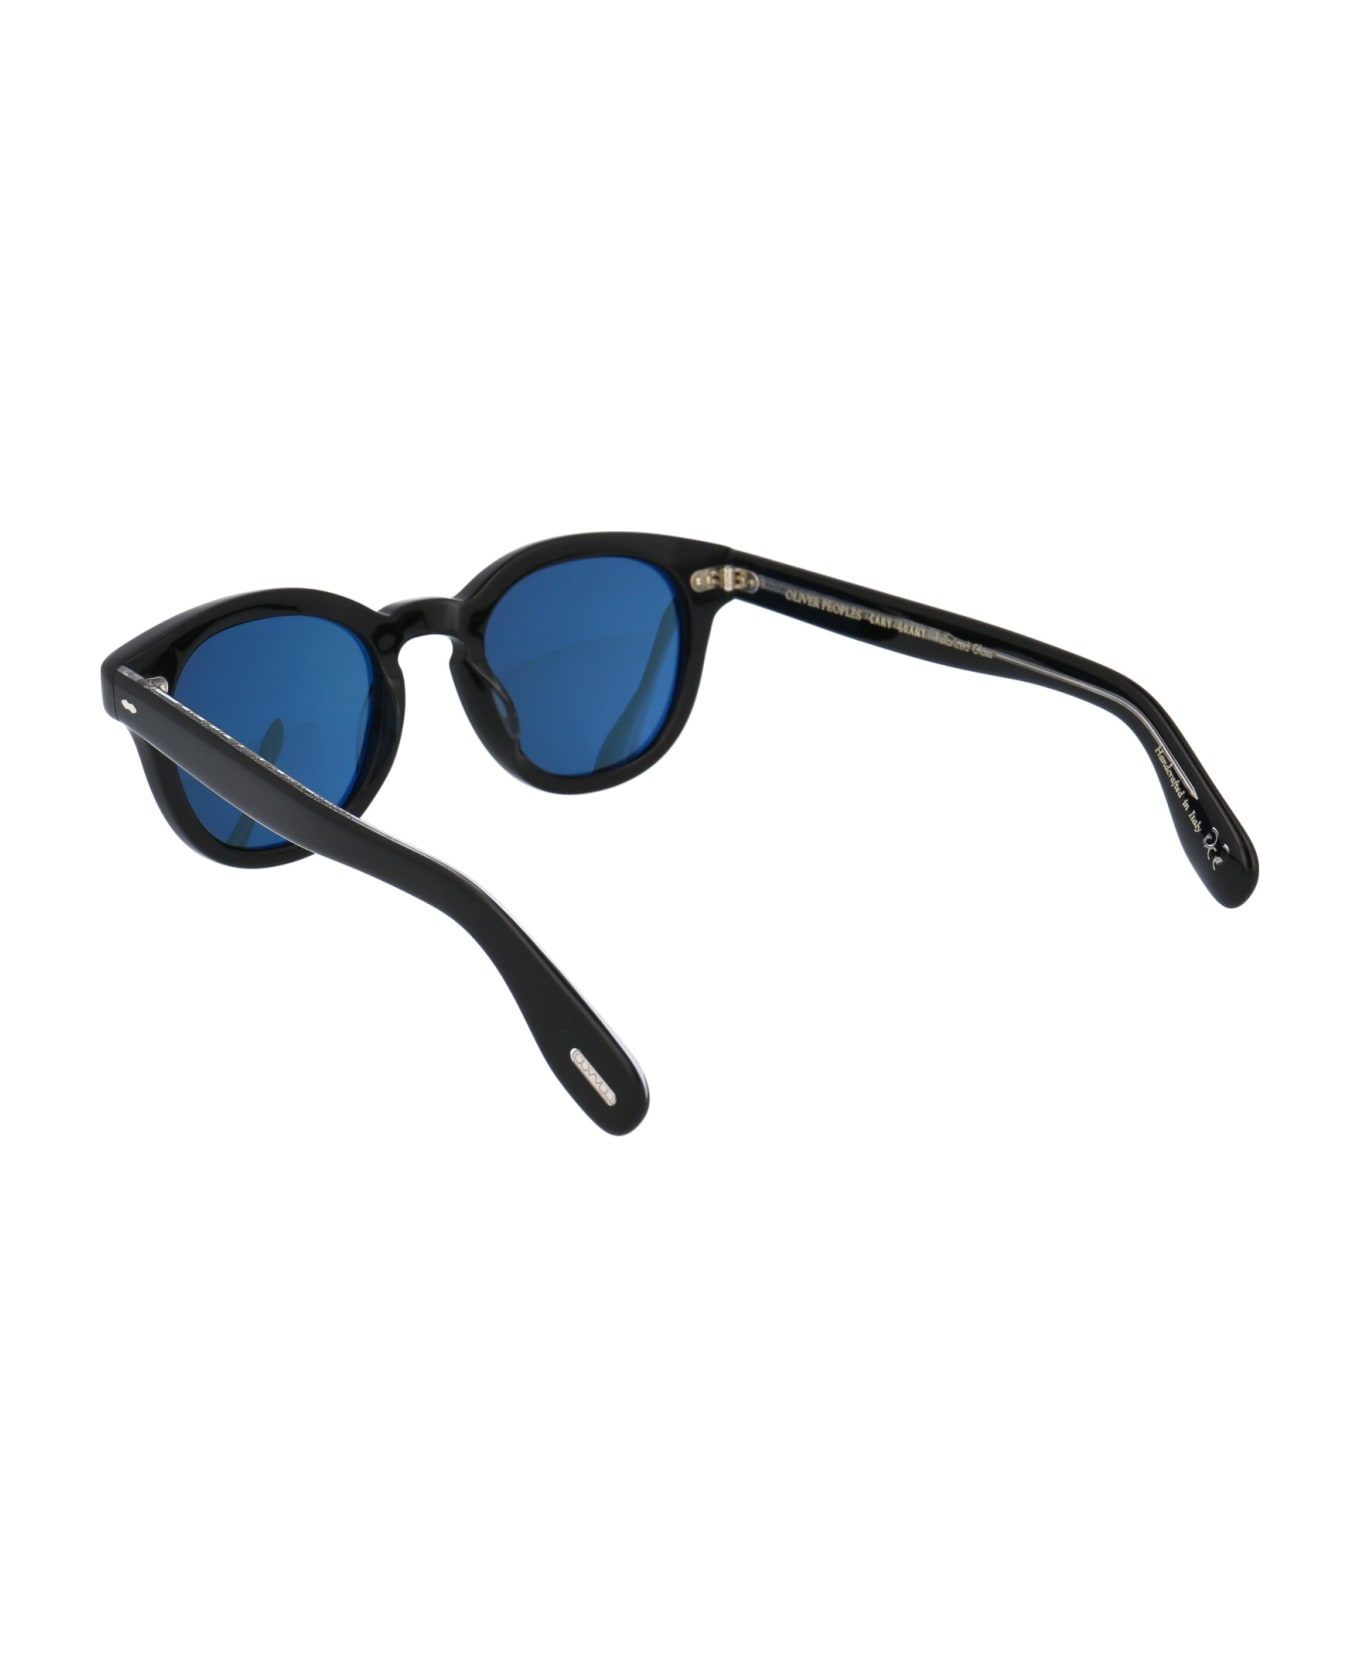 Oliver Peoples Cary Grant Sun Sunglasses Gabbana - 14923R BLACK